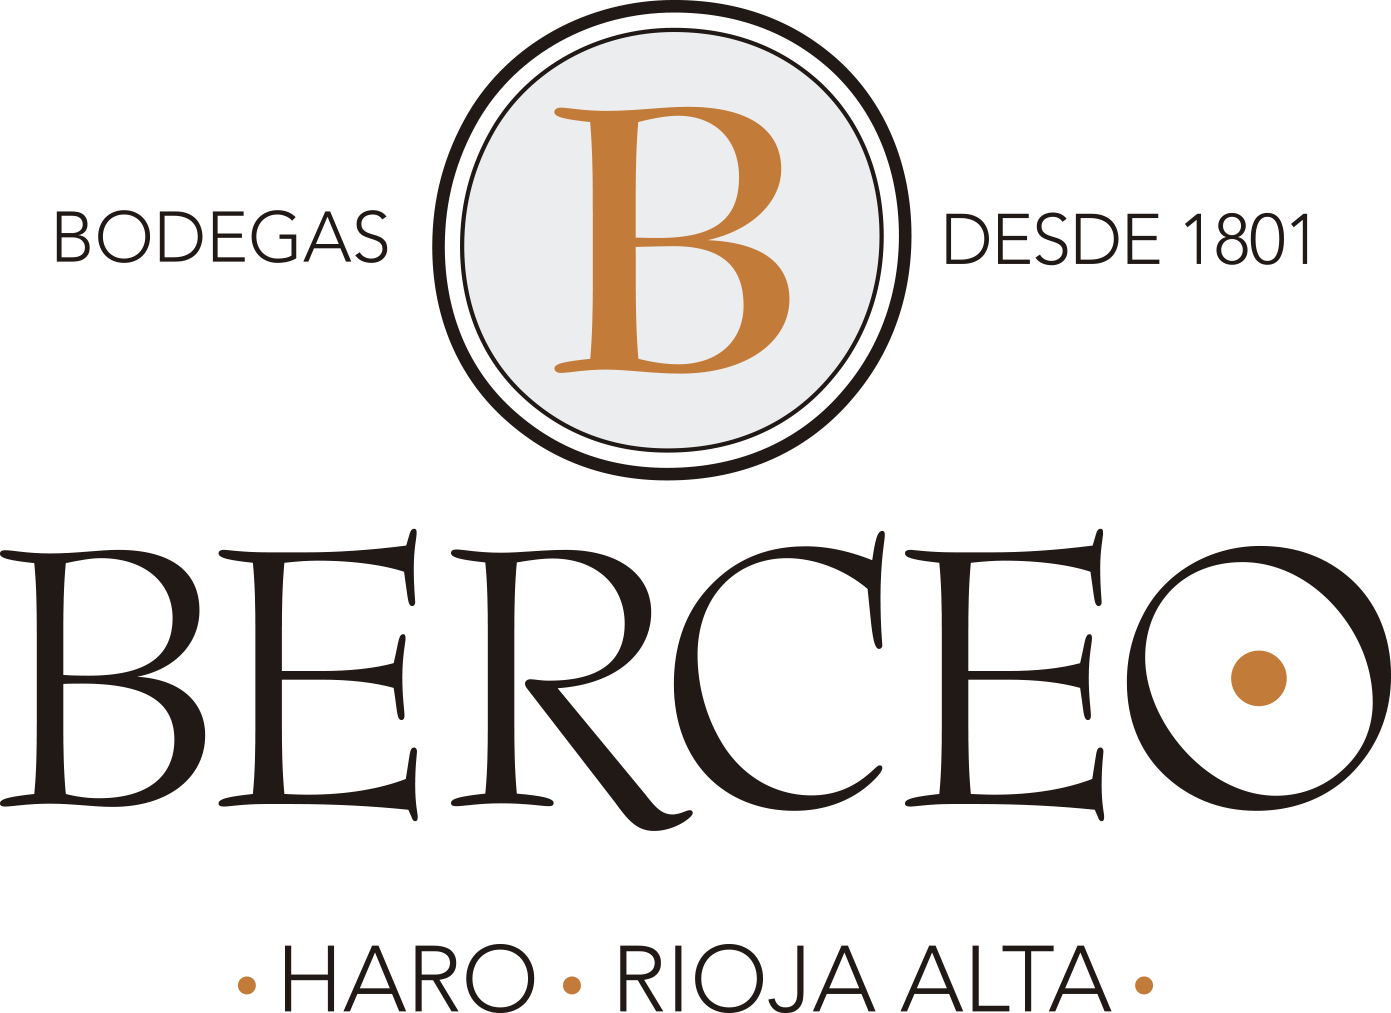 Logo from winery Bodegas Berceo